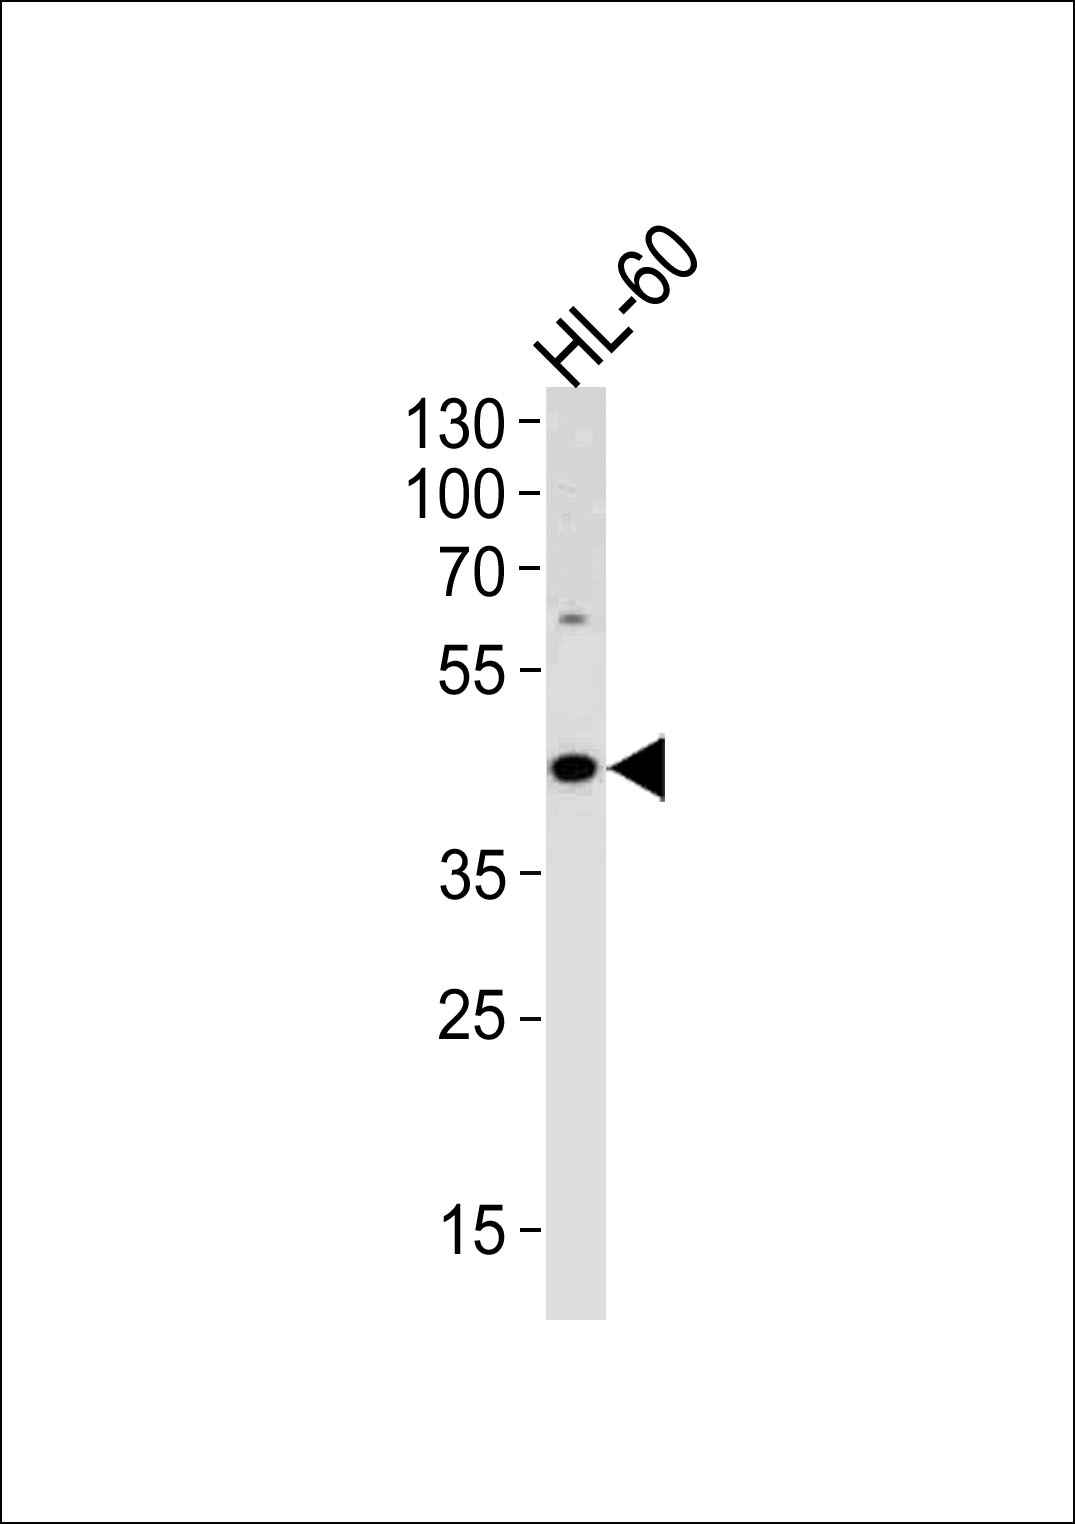 ADA Antibody (C-term) (Cat. #AP11650b) western blot analysis in HL-60 cell line lysates (35ug/lane).This demonstrates the ADA antibody detected the ADA protein (arrow).